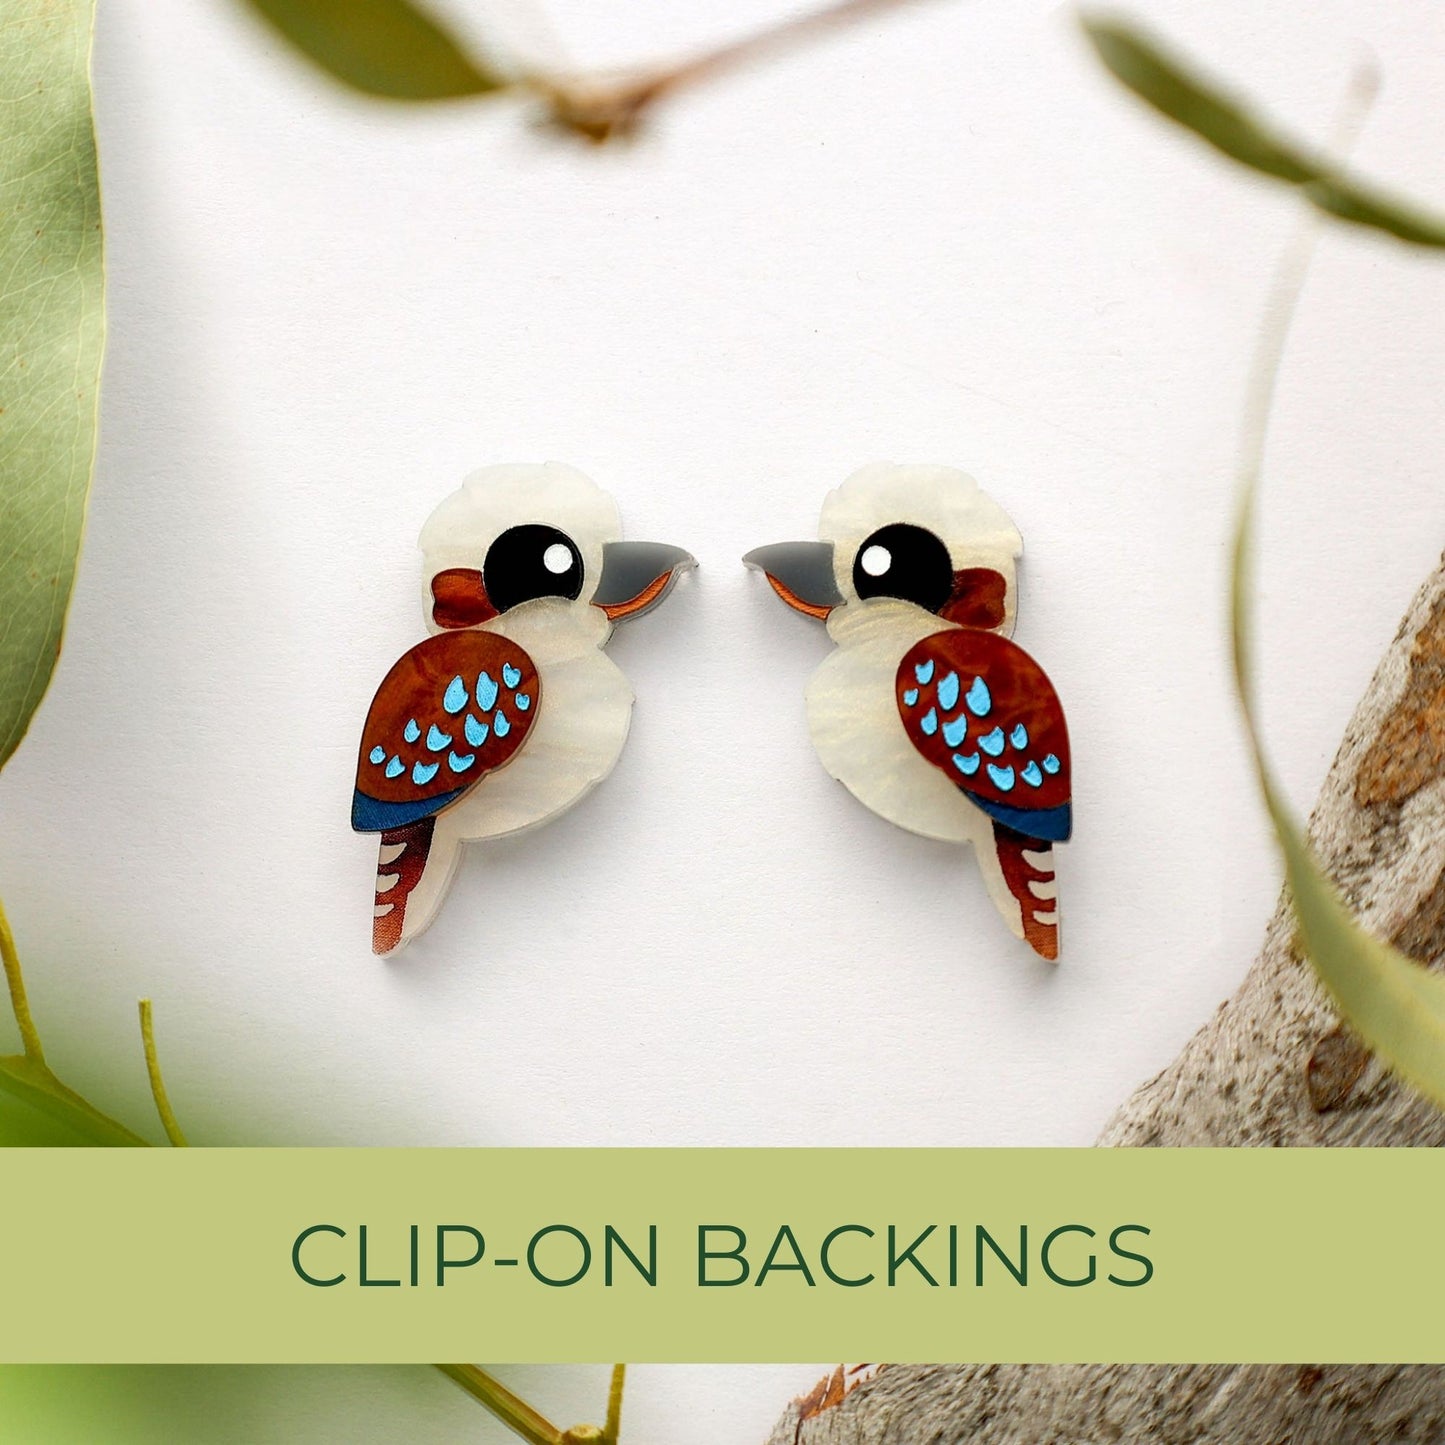 BINKABU Kookaburra Studs handmade acrylic bird earrings